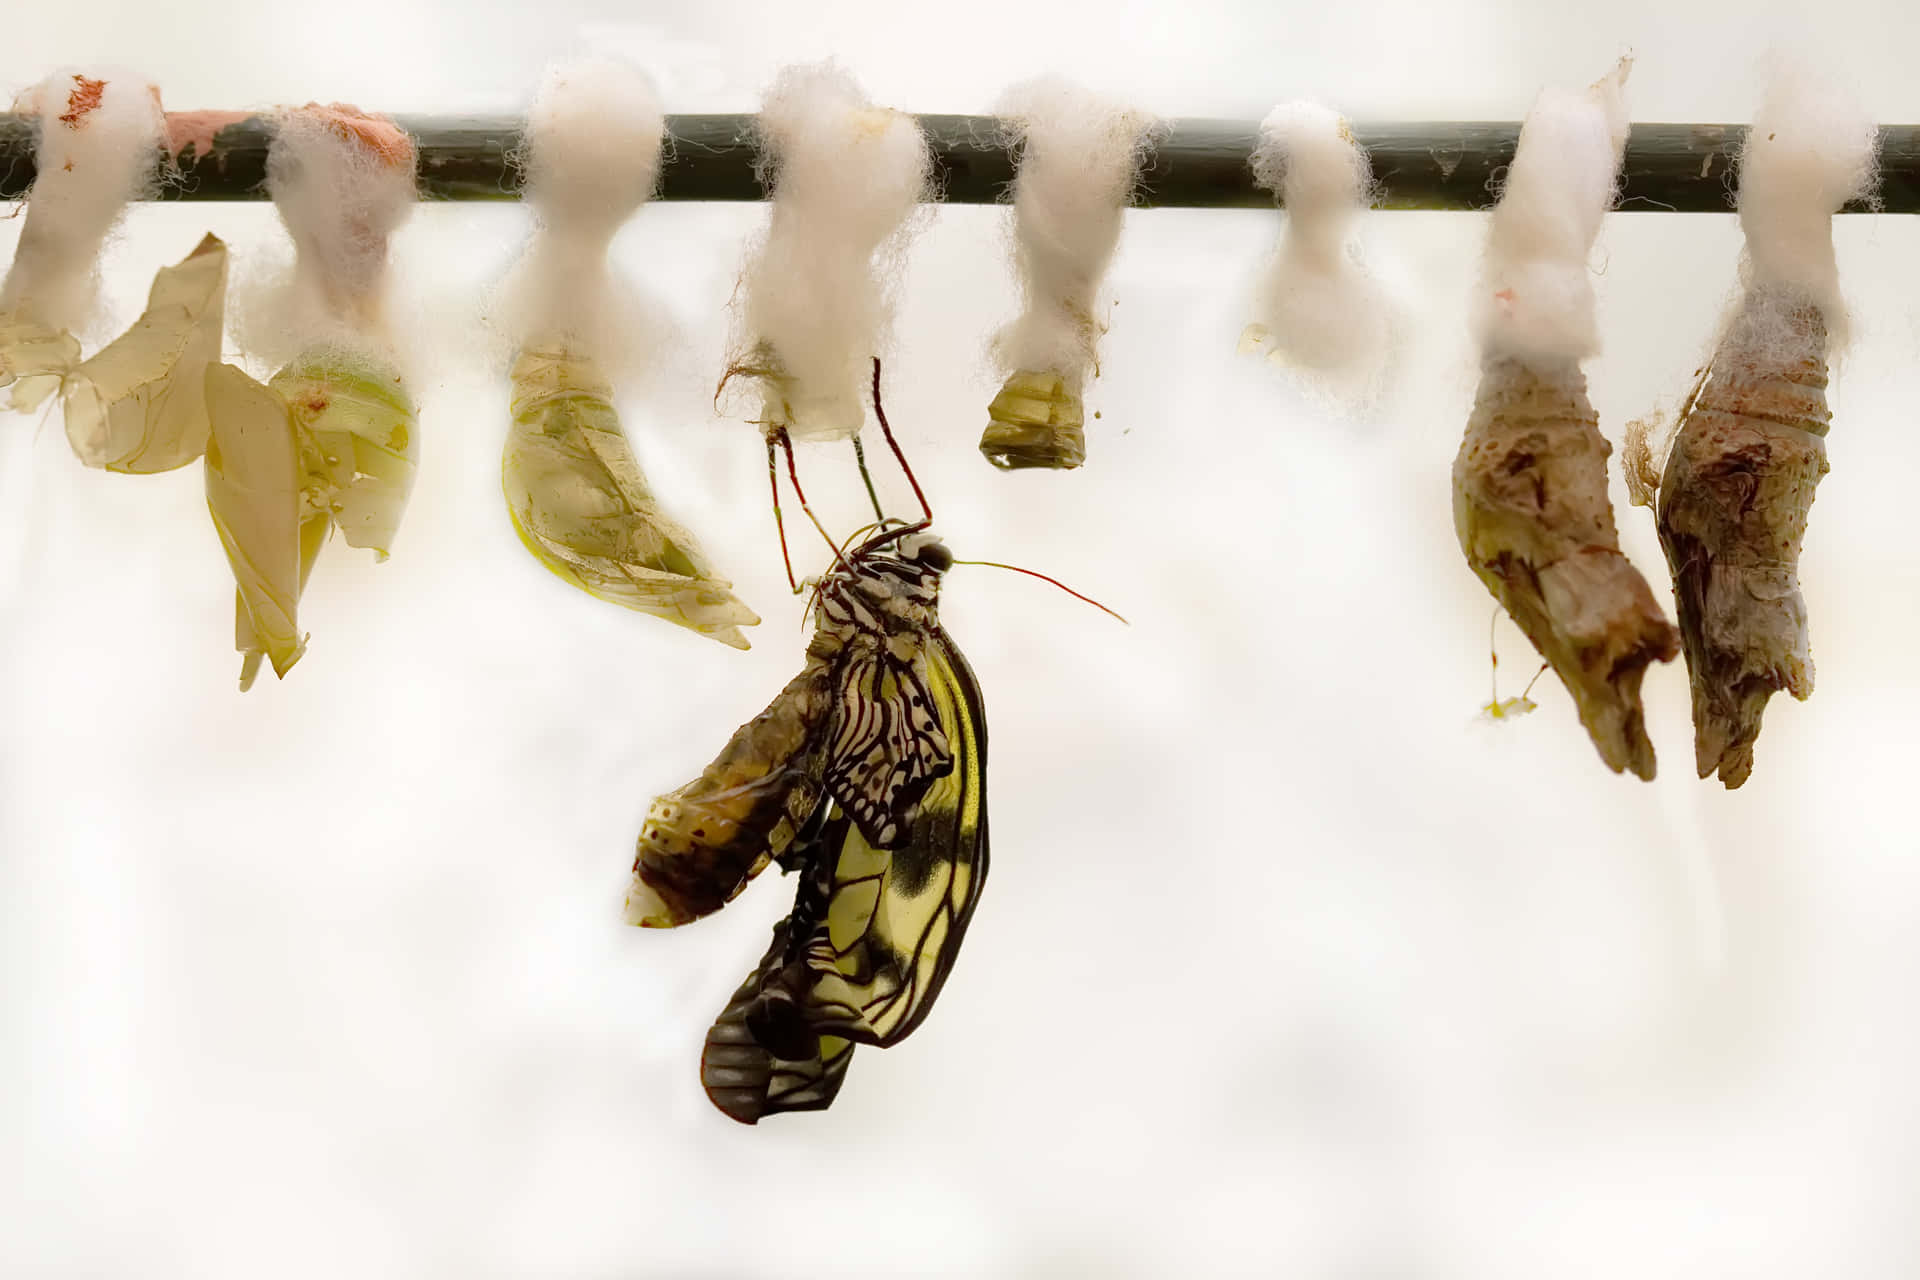 An emerging butterfly prepares to take flight. Wallpaper